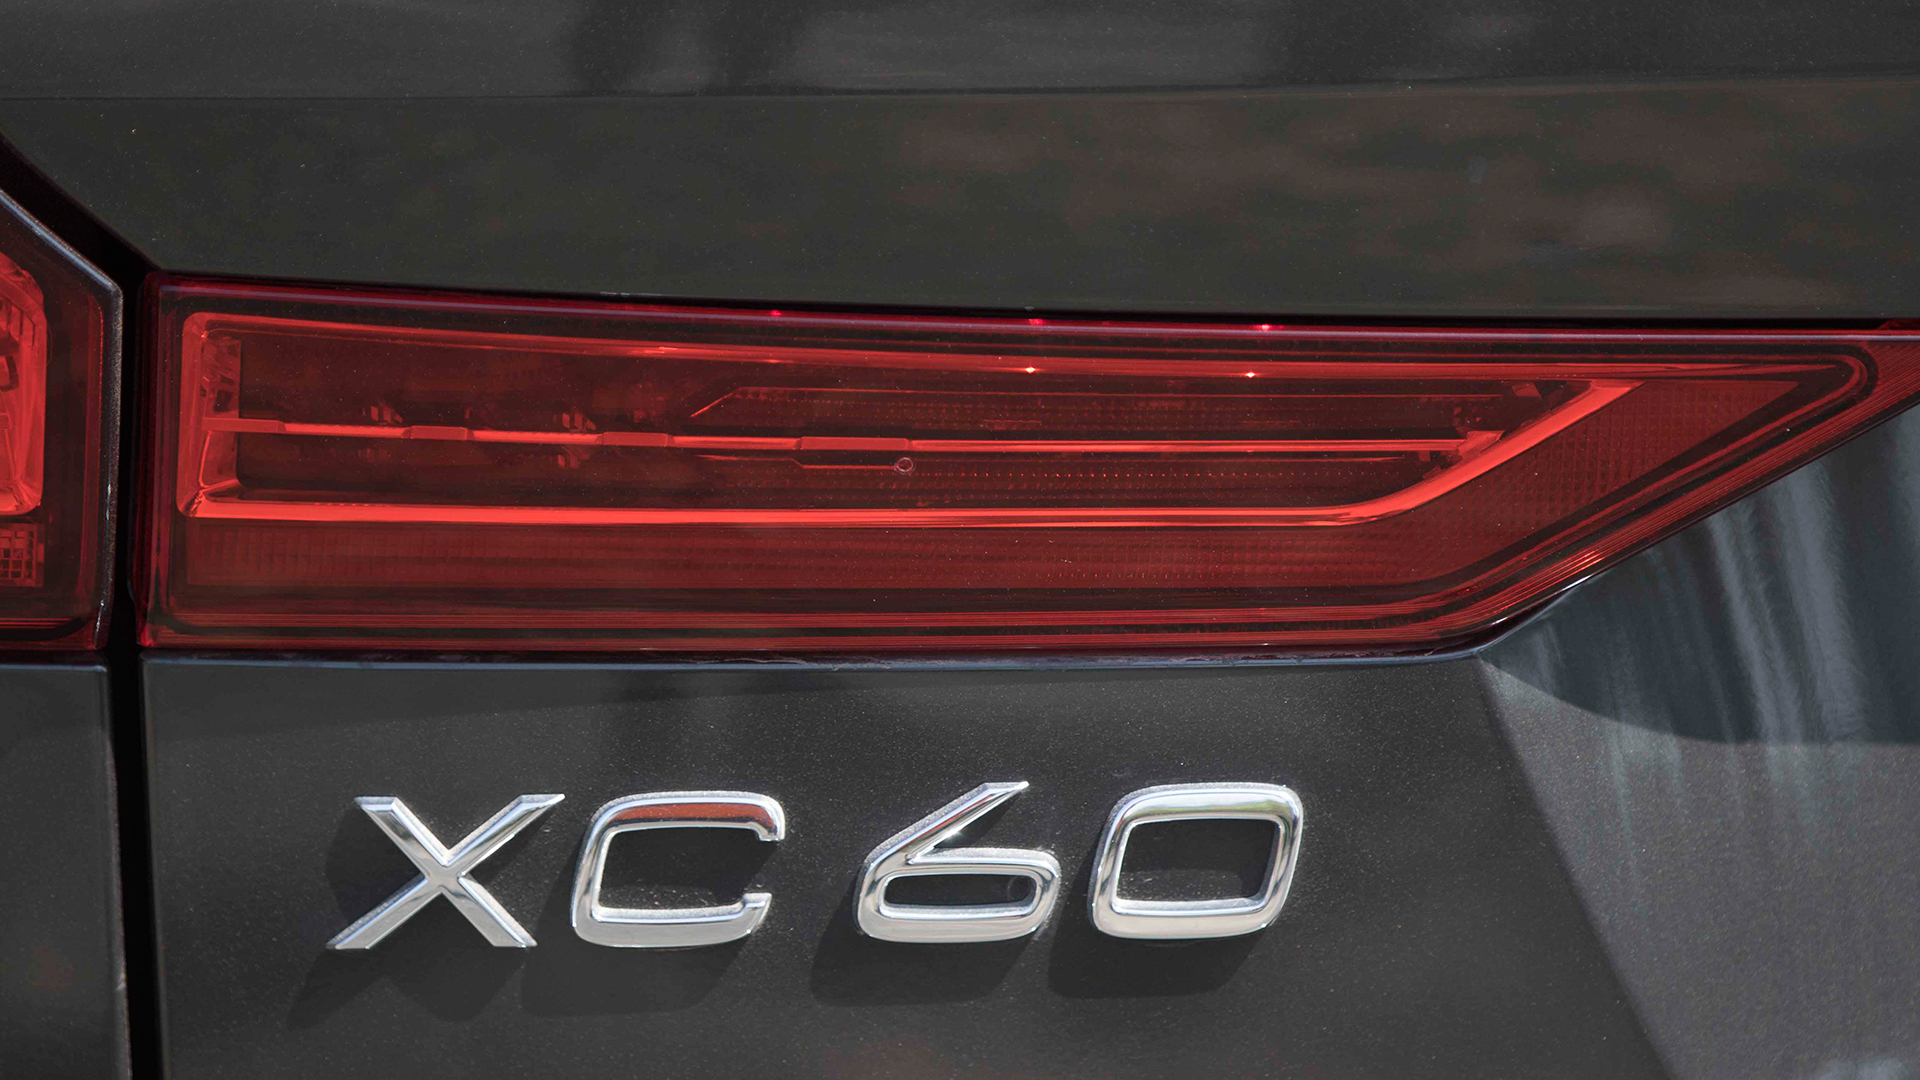 Volvo XC60 2018 Inscription D5 Exterior